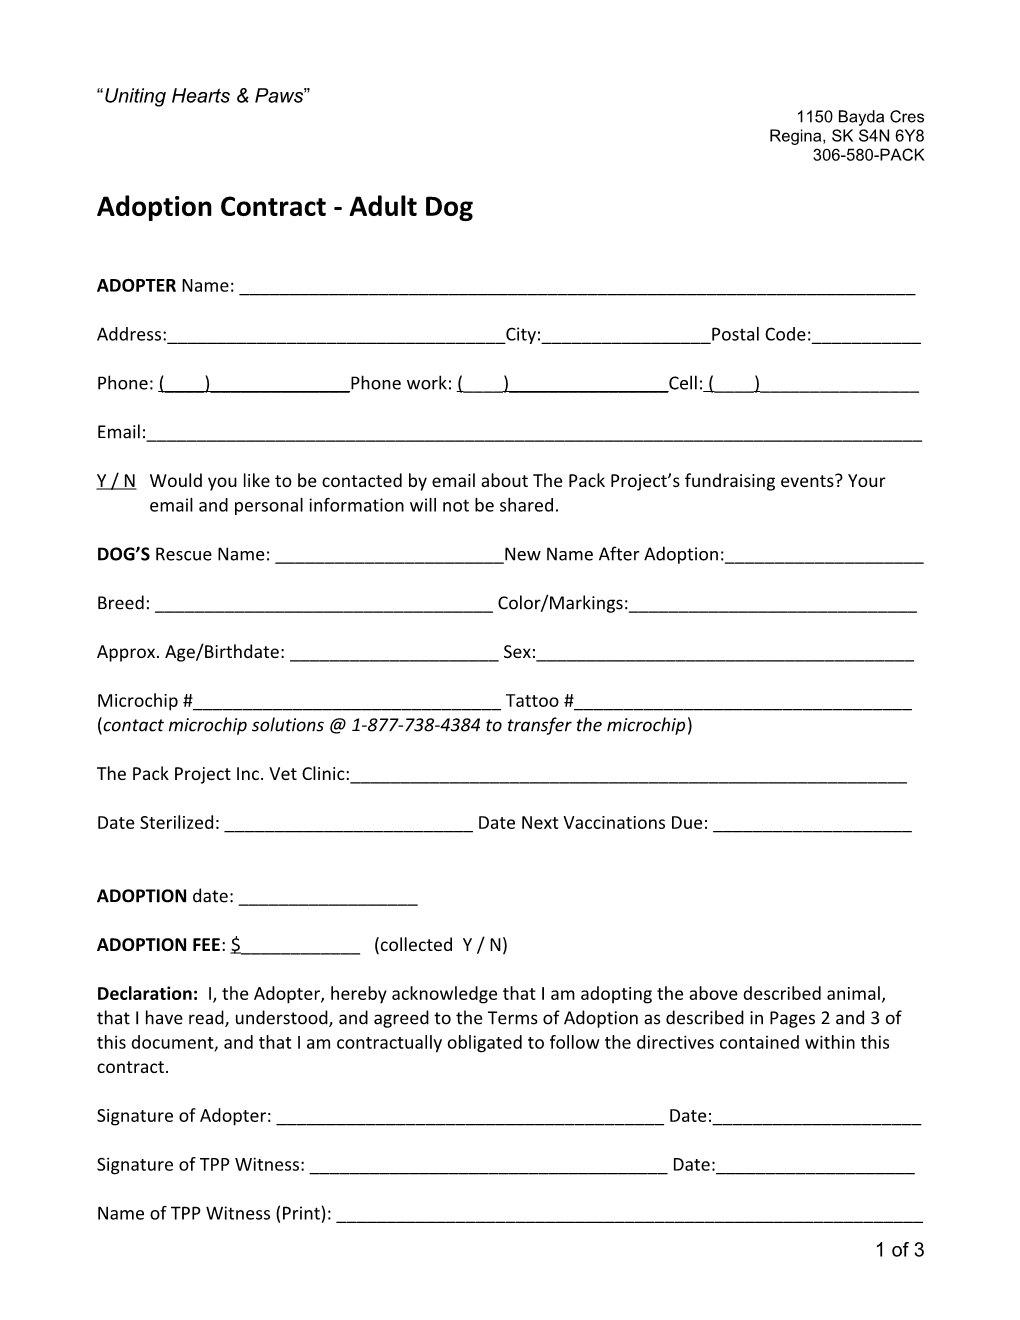 Adoption Contract - Adult Dog